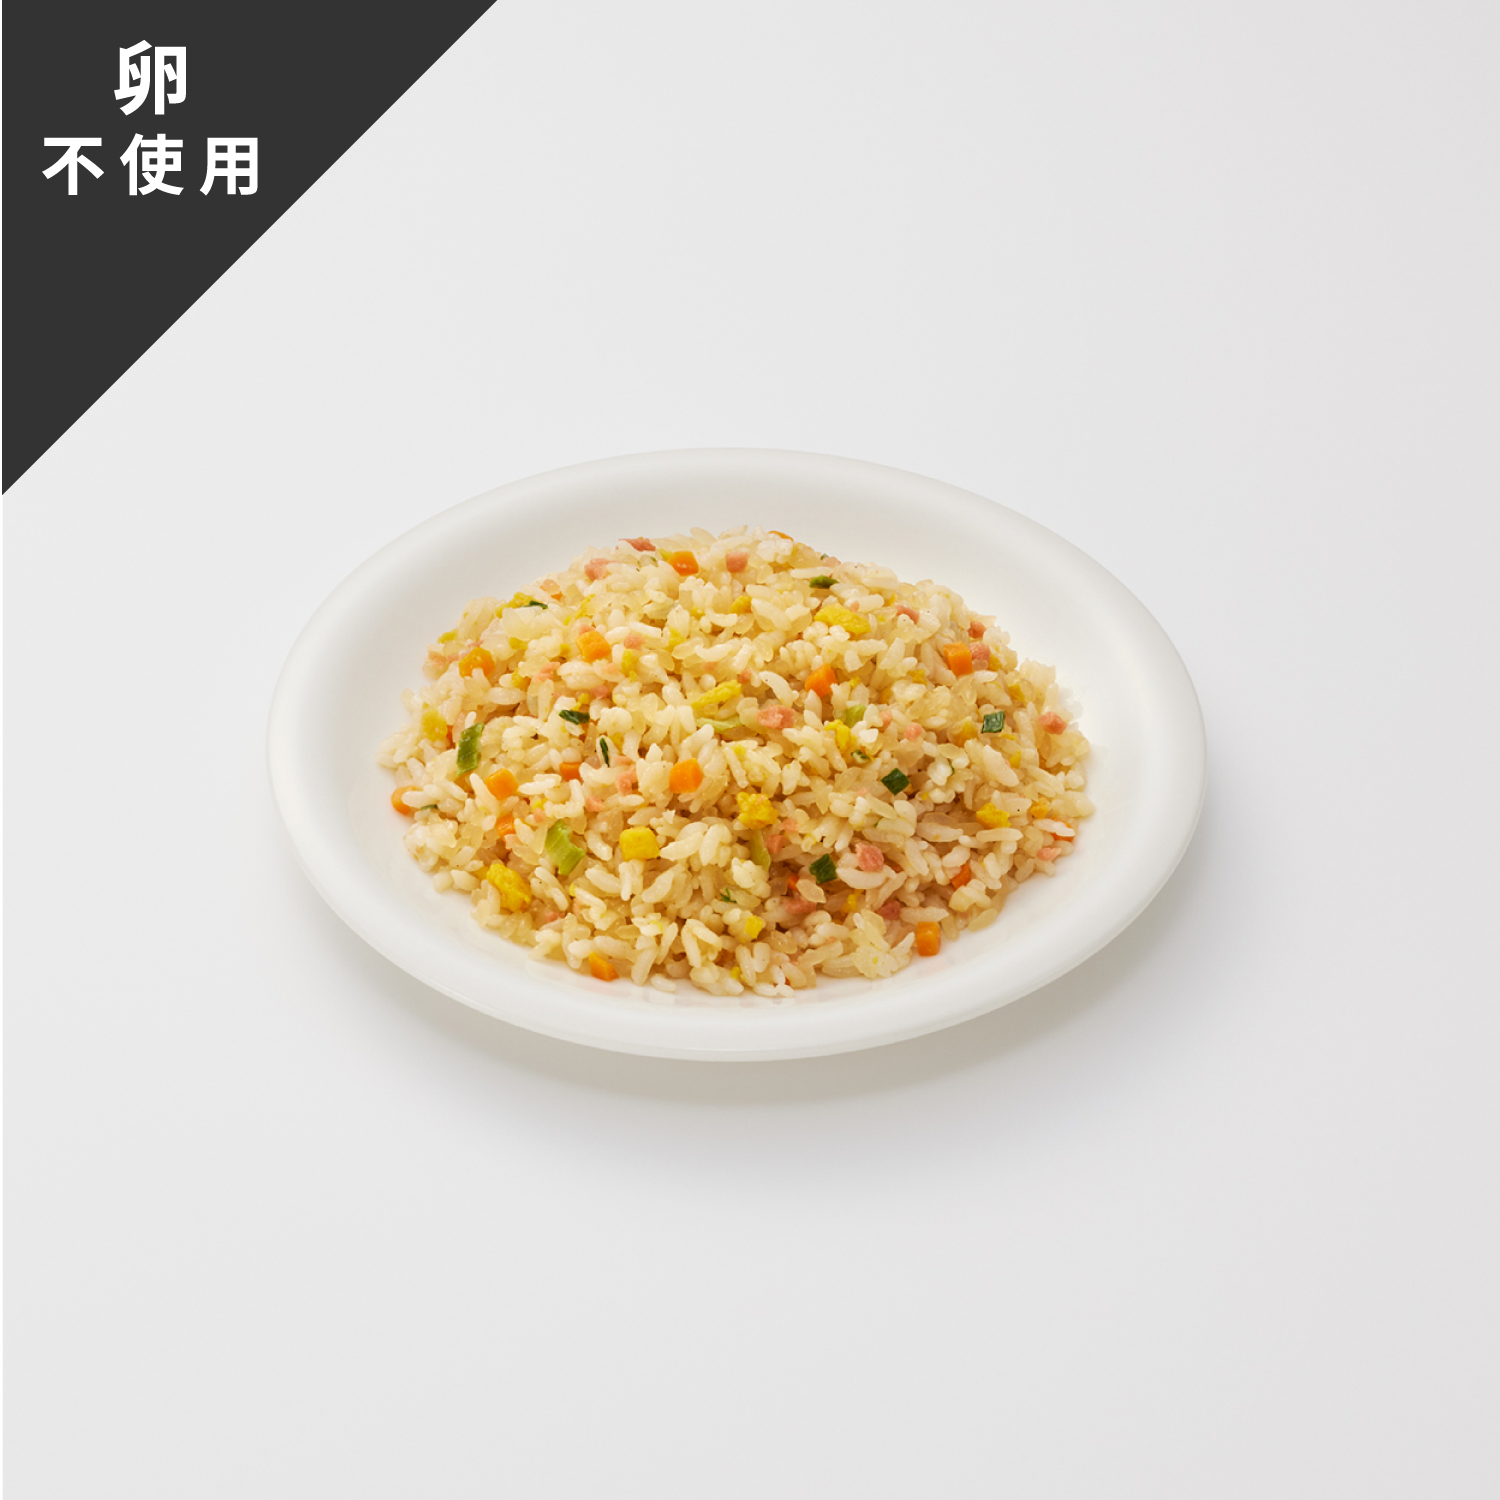 BEYOND FREE(ビヨンドフリー) こんにゃく米とお米で作った炒飯の商品画像1 